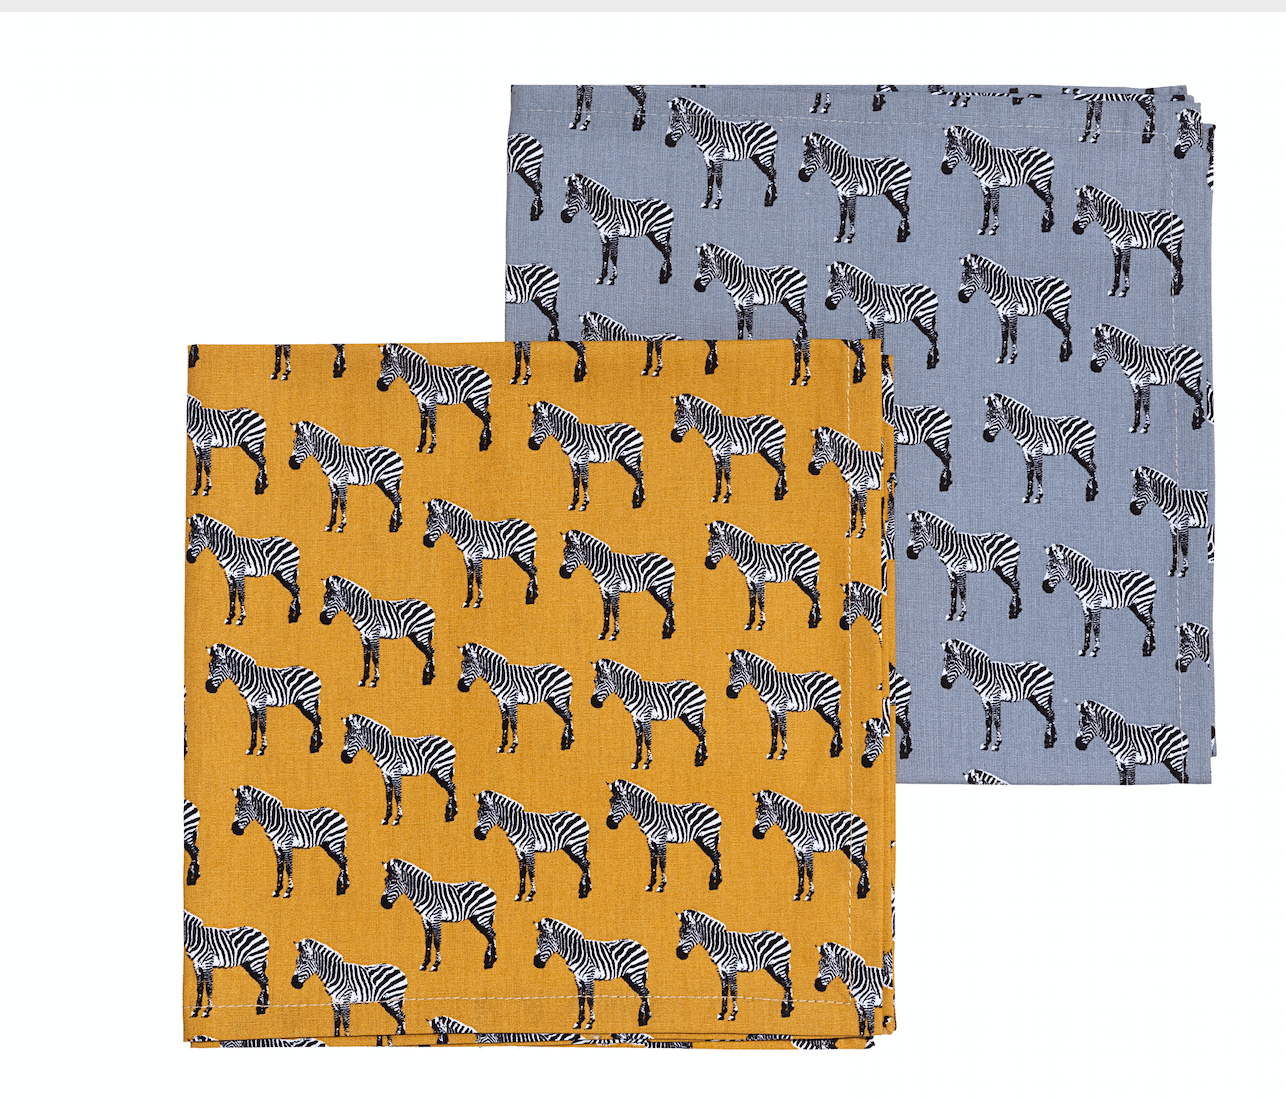 Image of Set di 2 tovaglioli Zebra/ Zebra napkins set of 2 